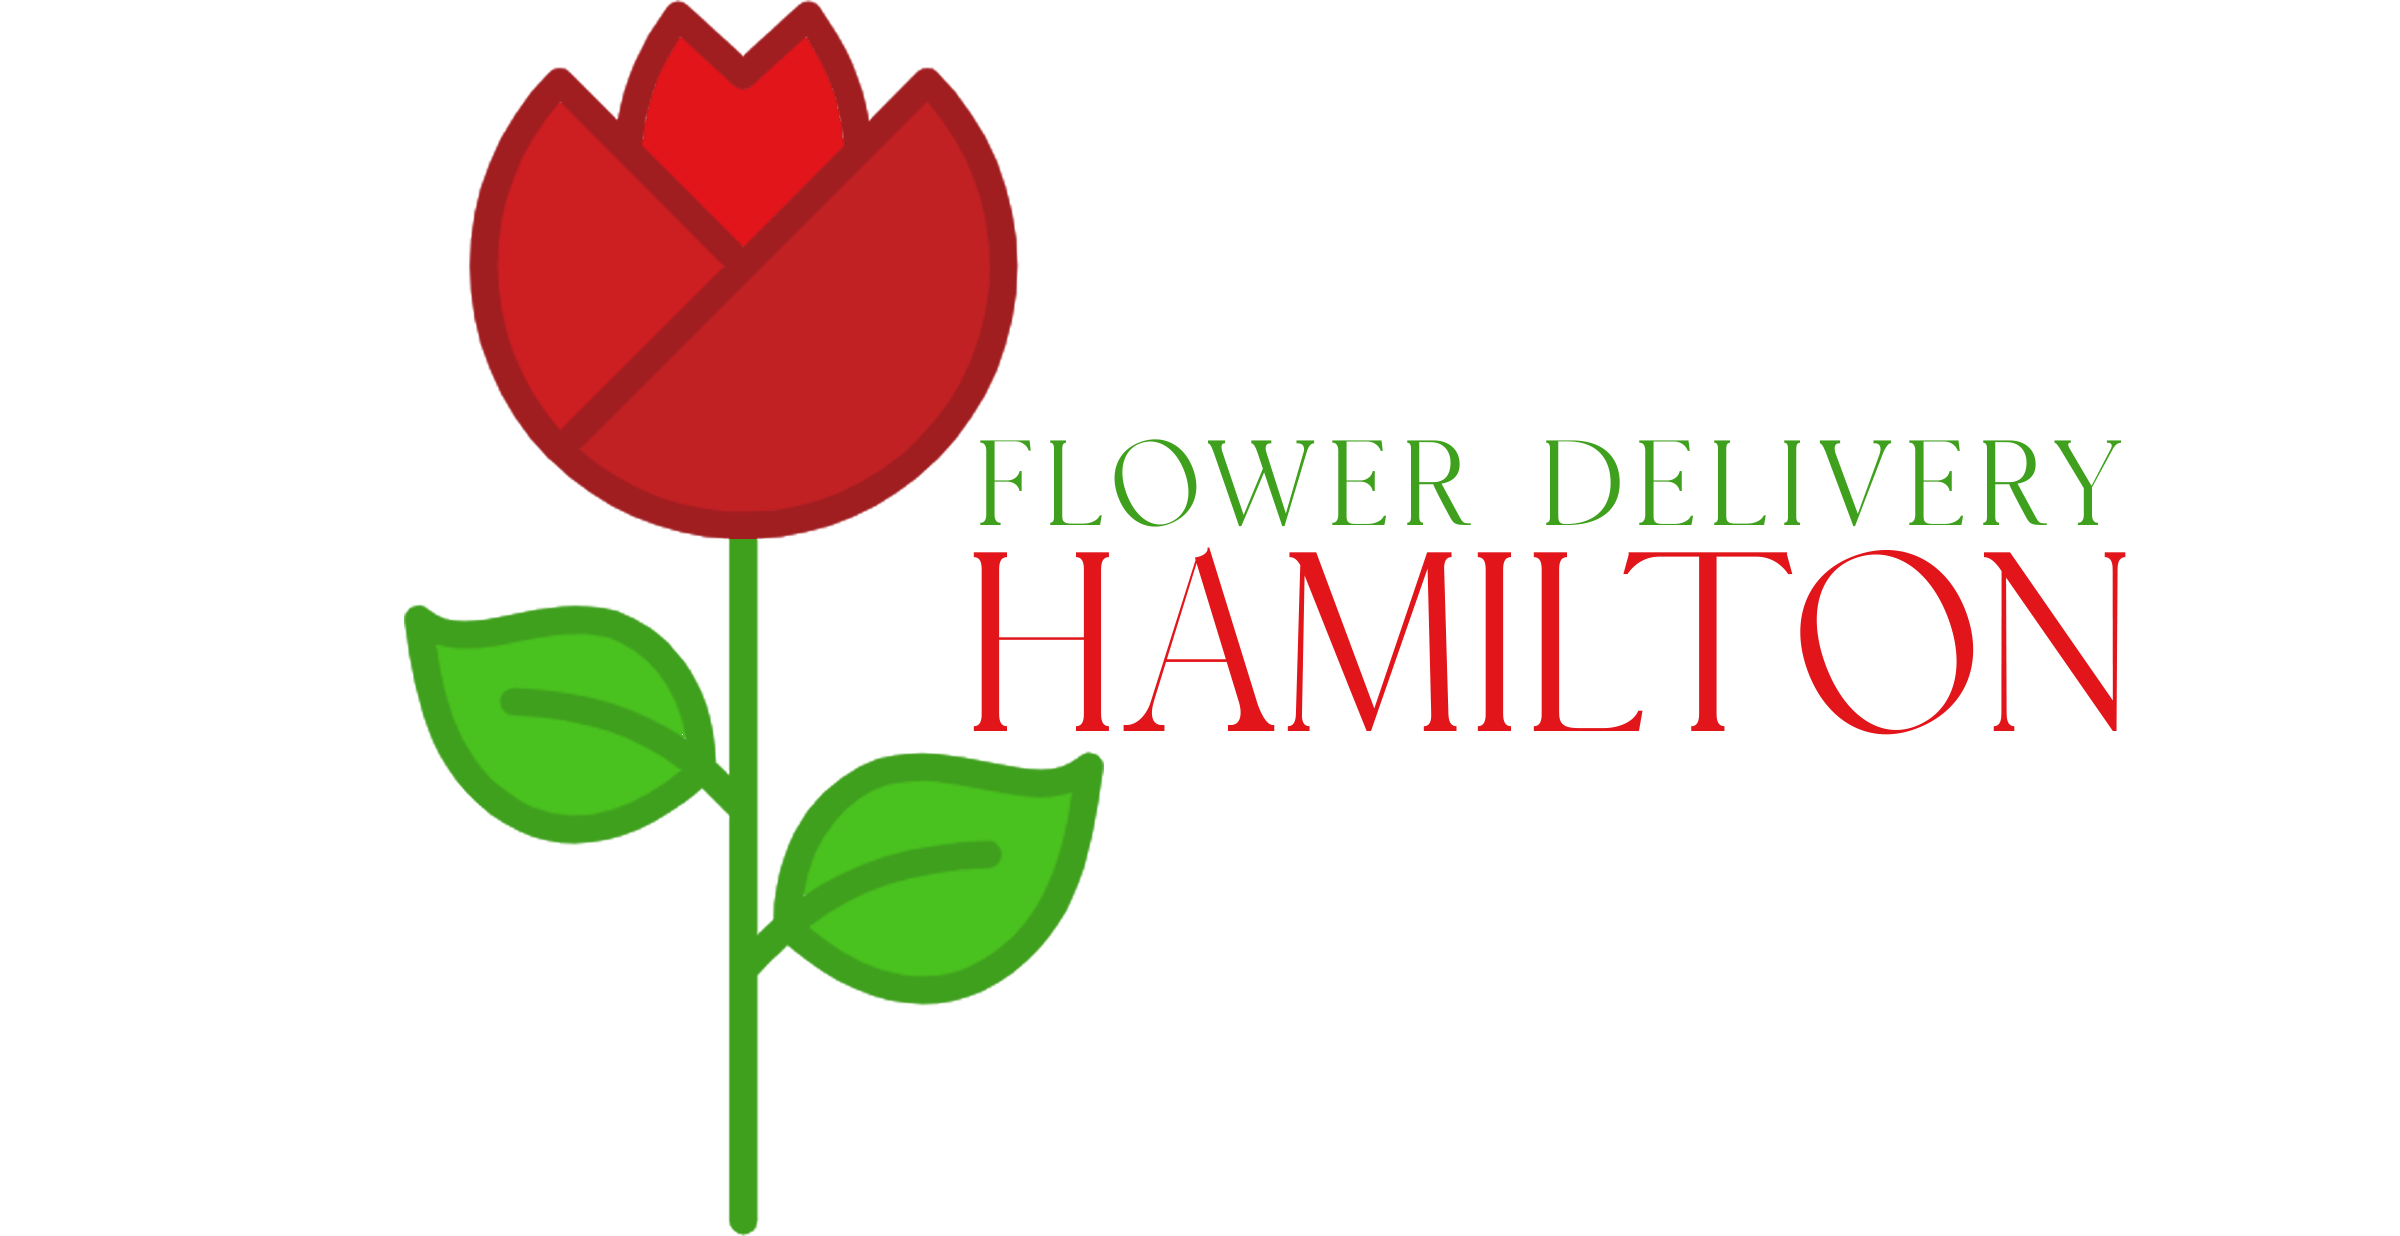 Hamilton Flower Delivery